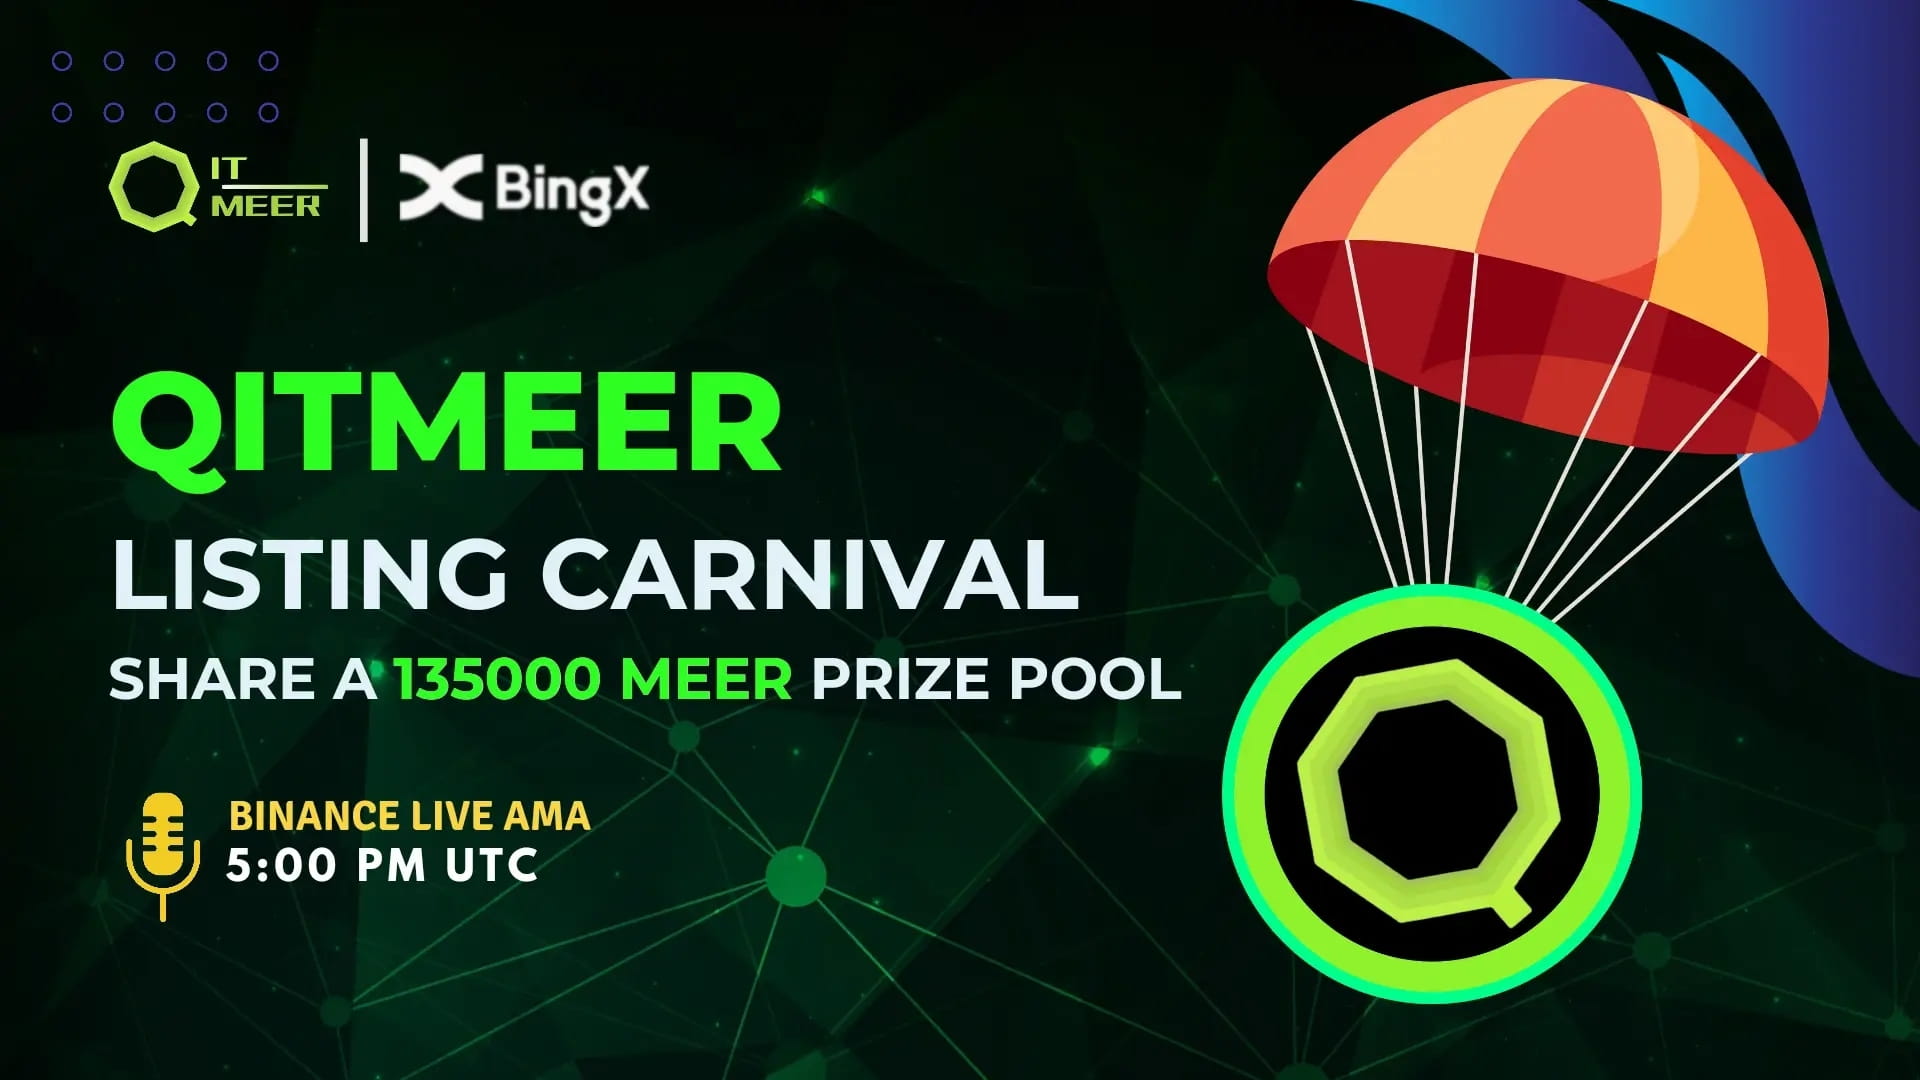 Qitmeer BingX Carnival Event(12kUSDT) Up for grab